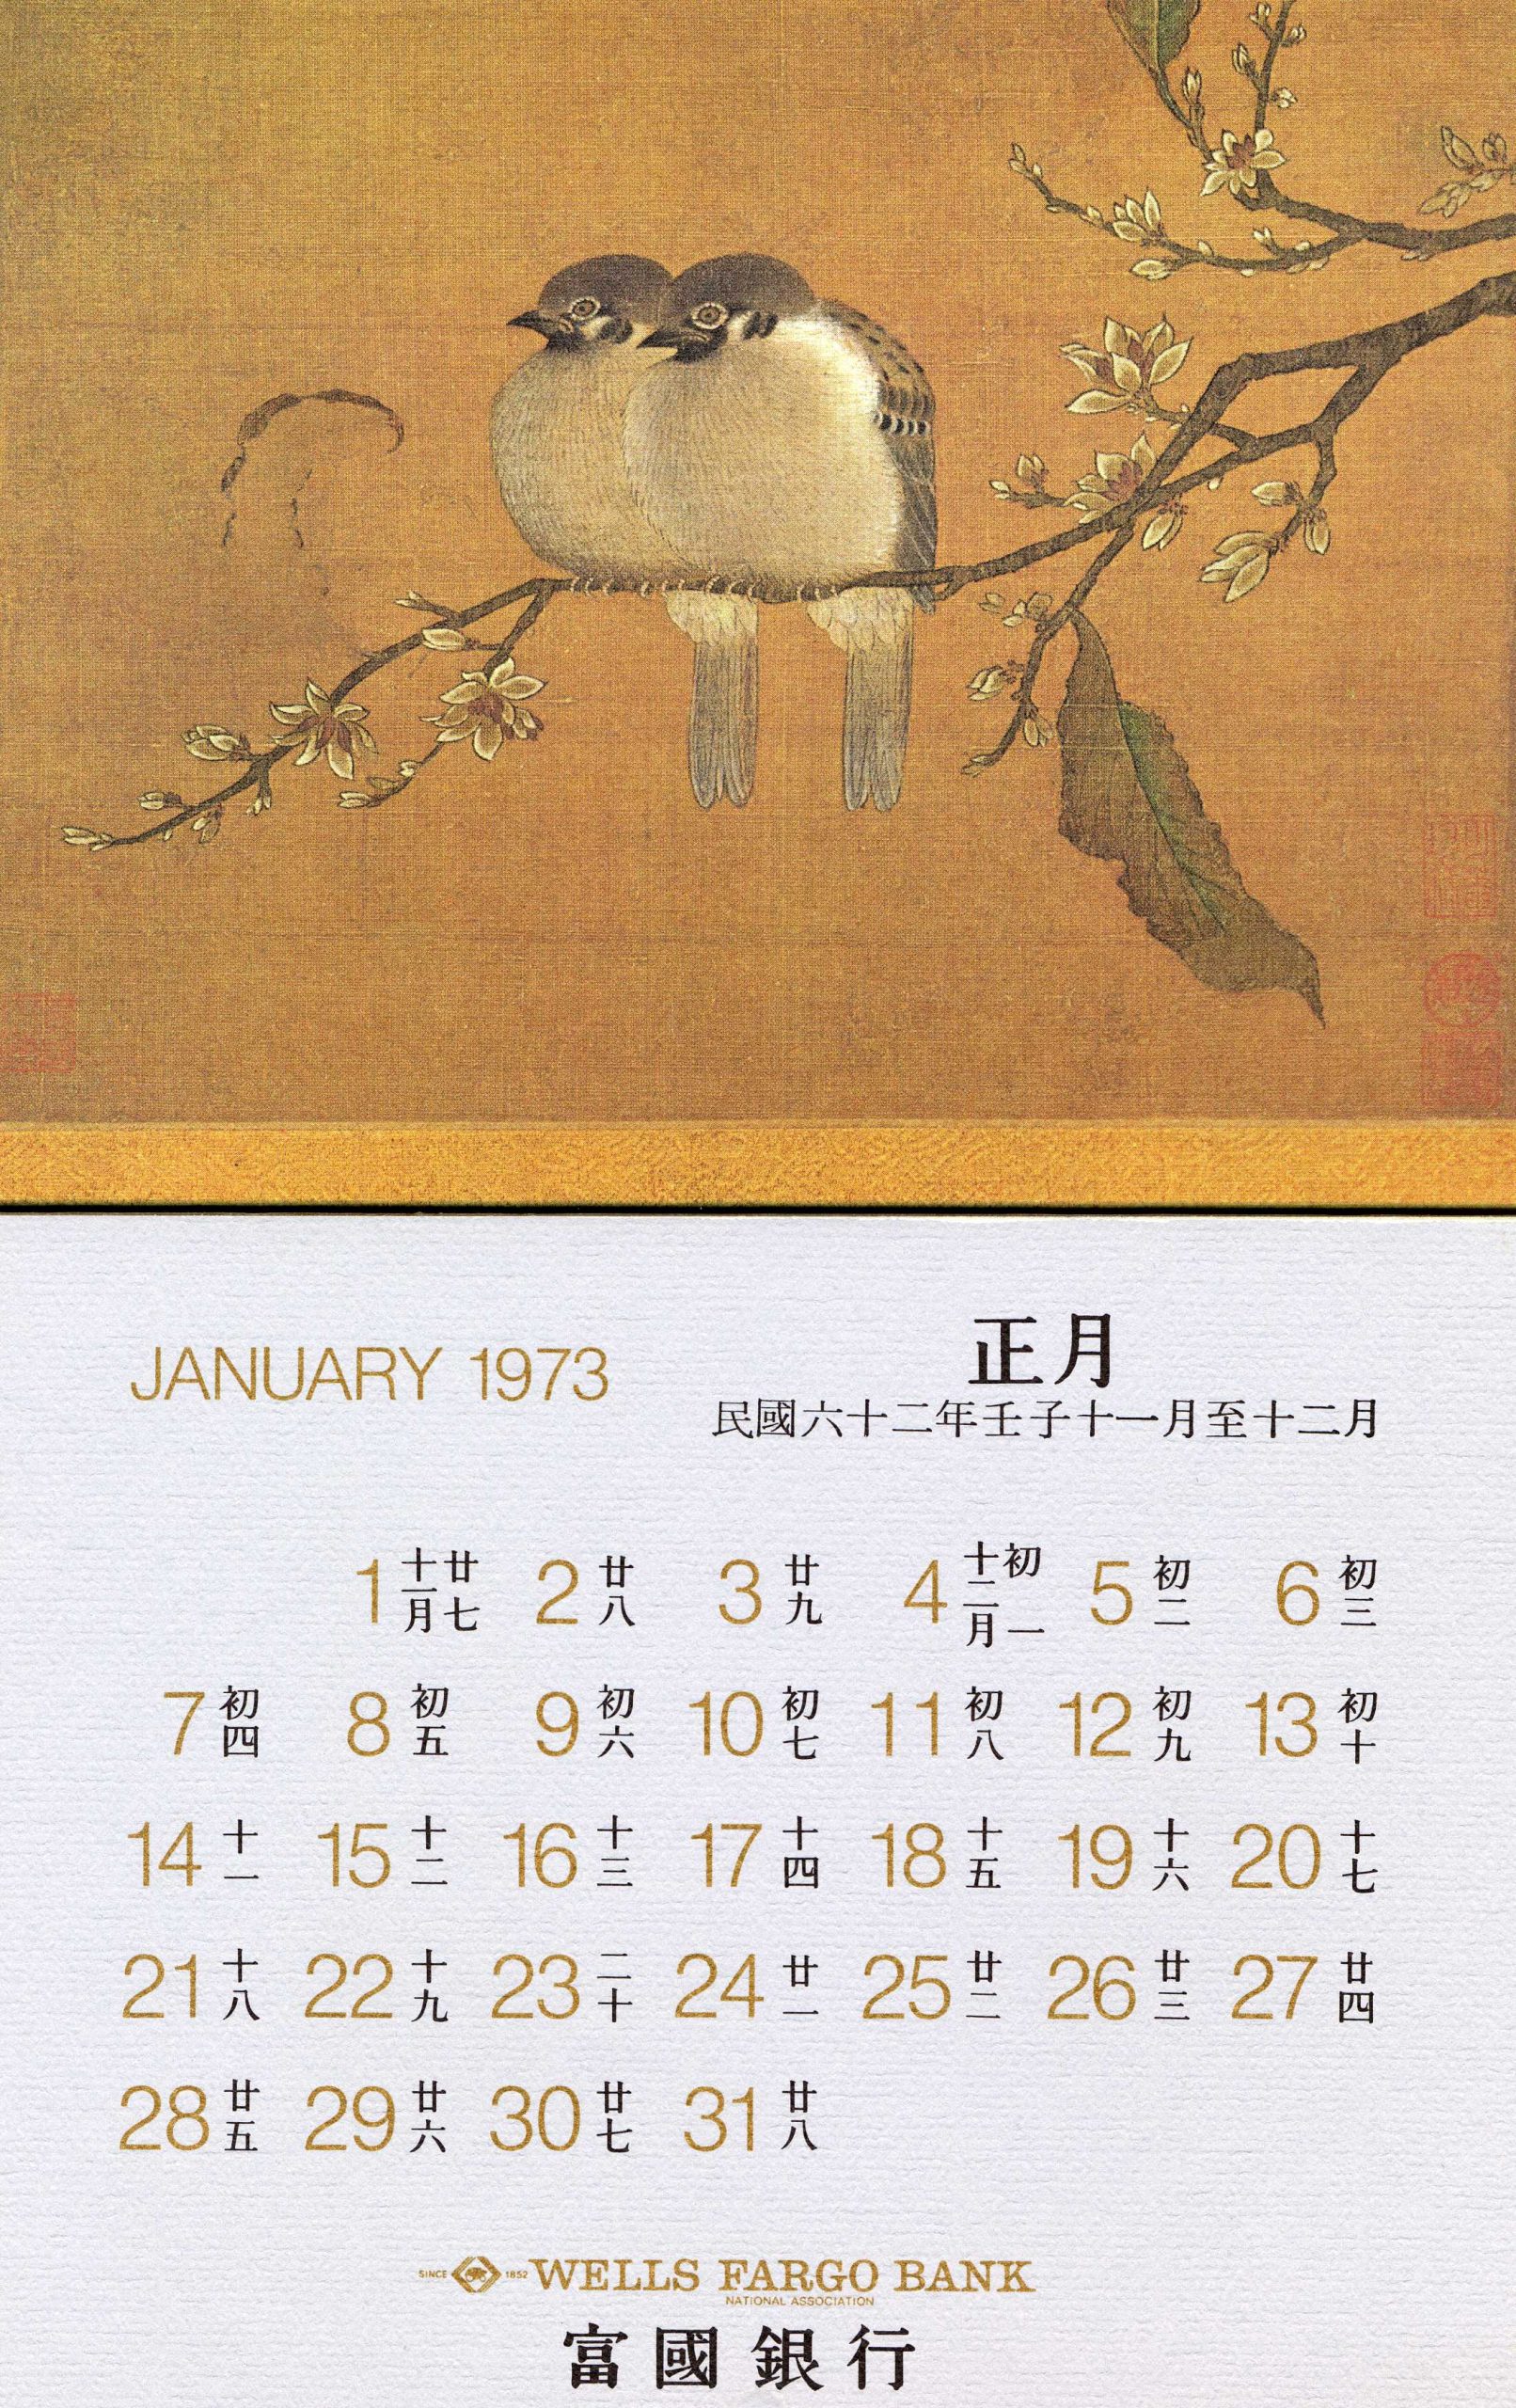 1973 calendar features Asian art featuring two birds on a branch.